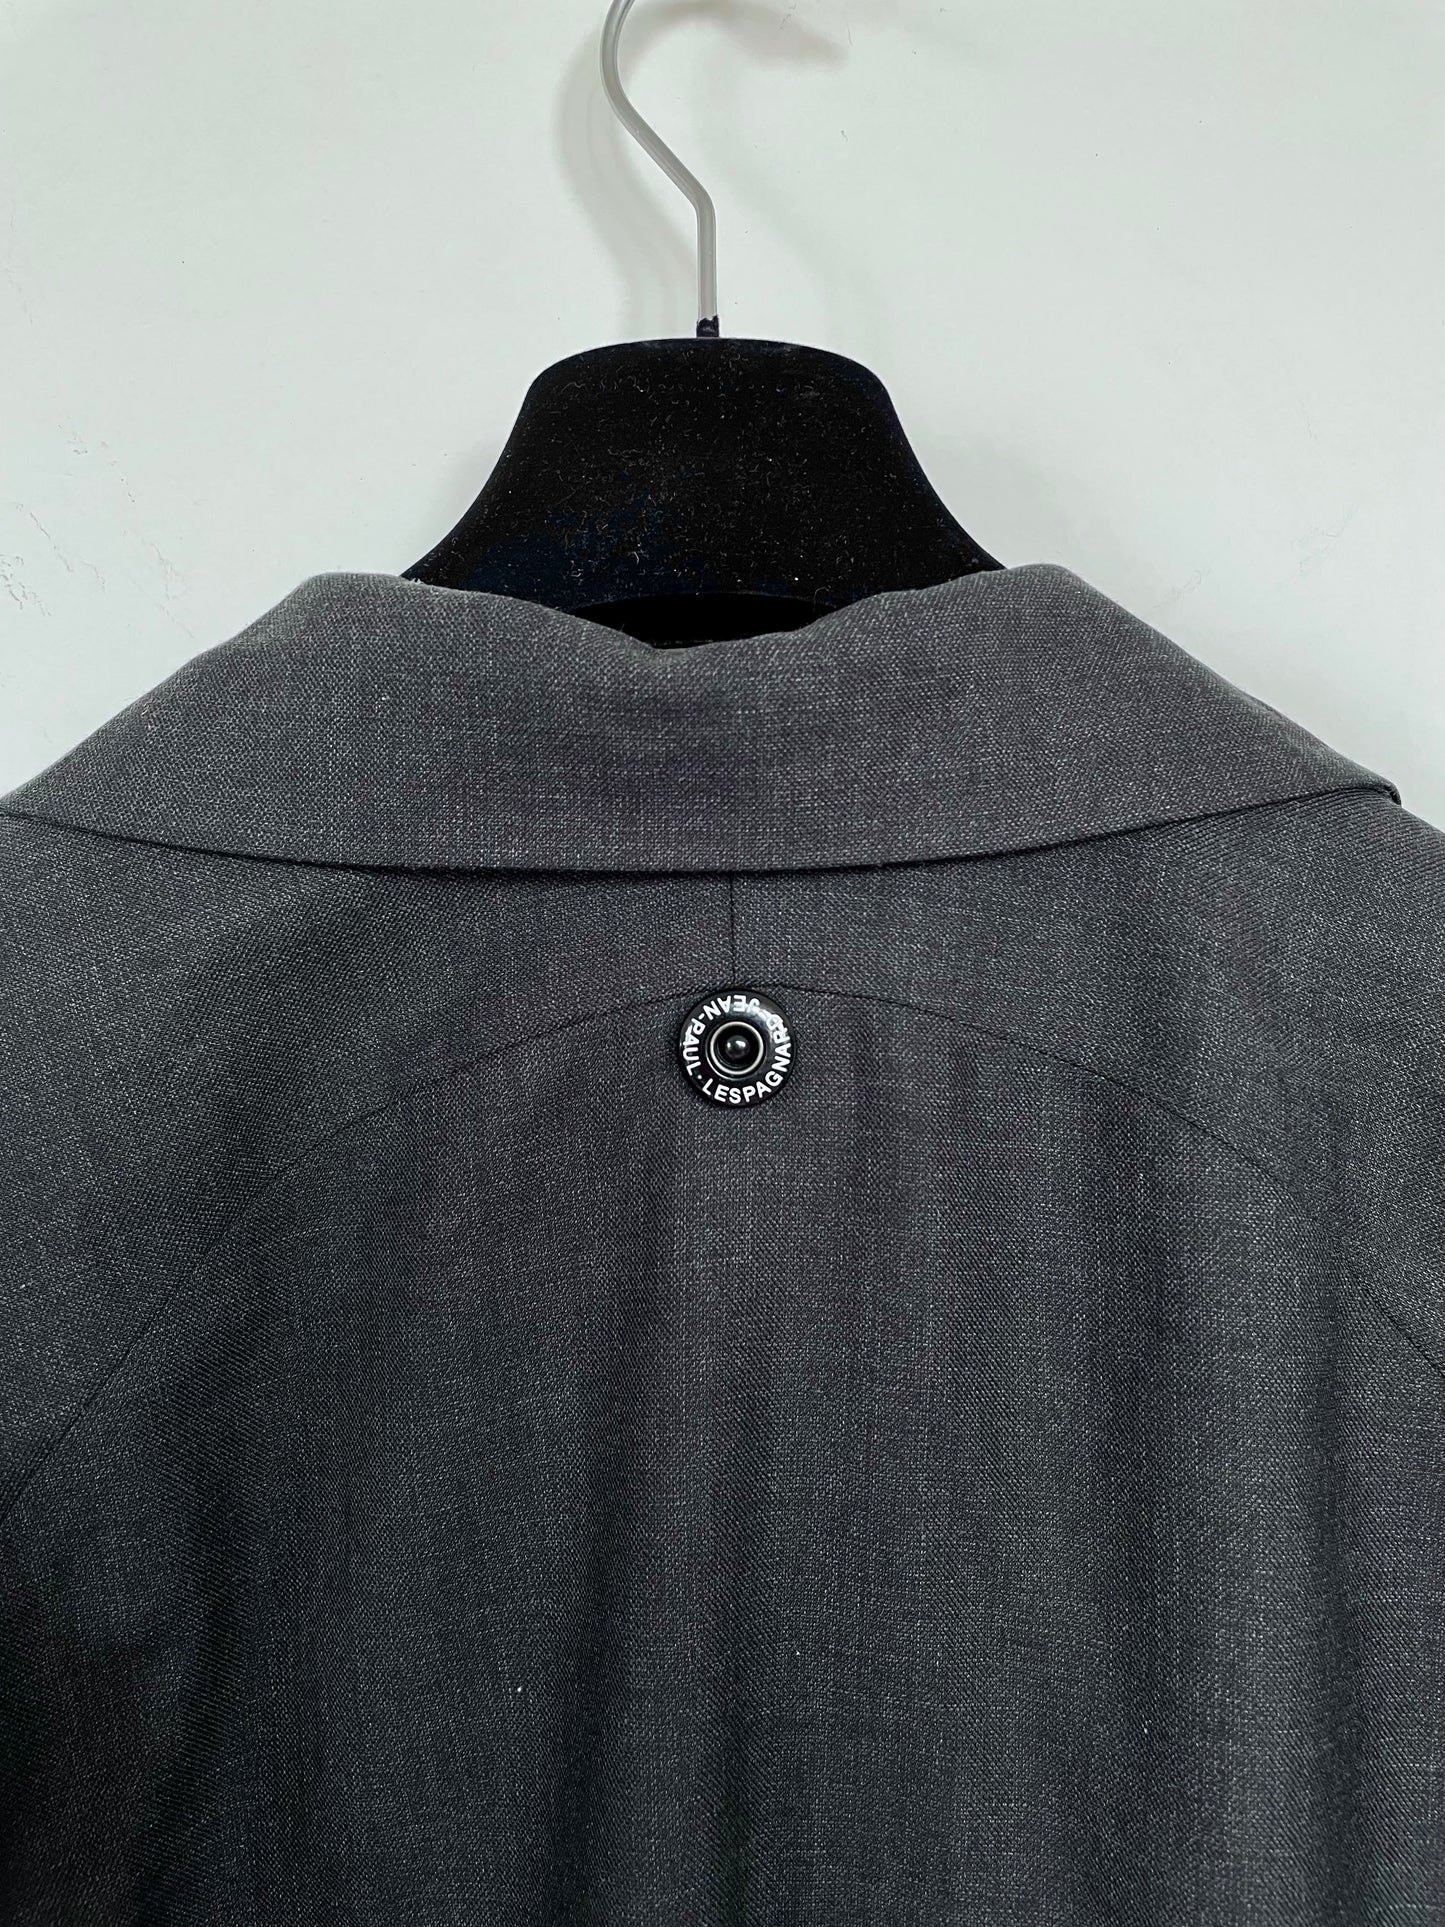 Jean-Paul Lespagnard grey transformable blazer with open armpits